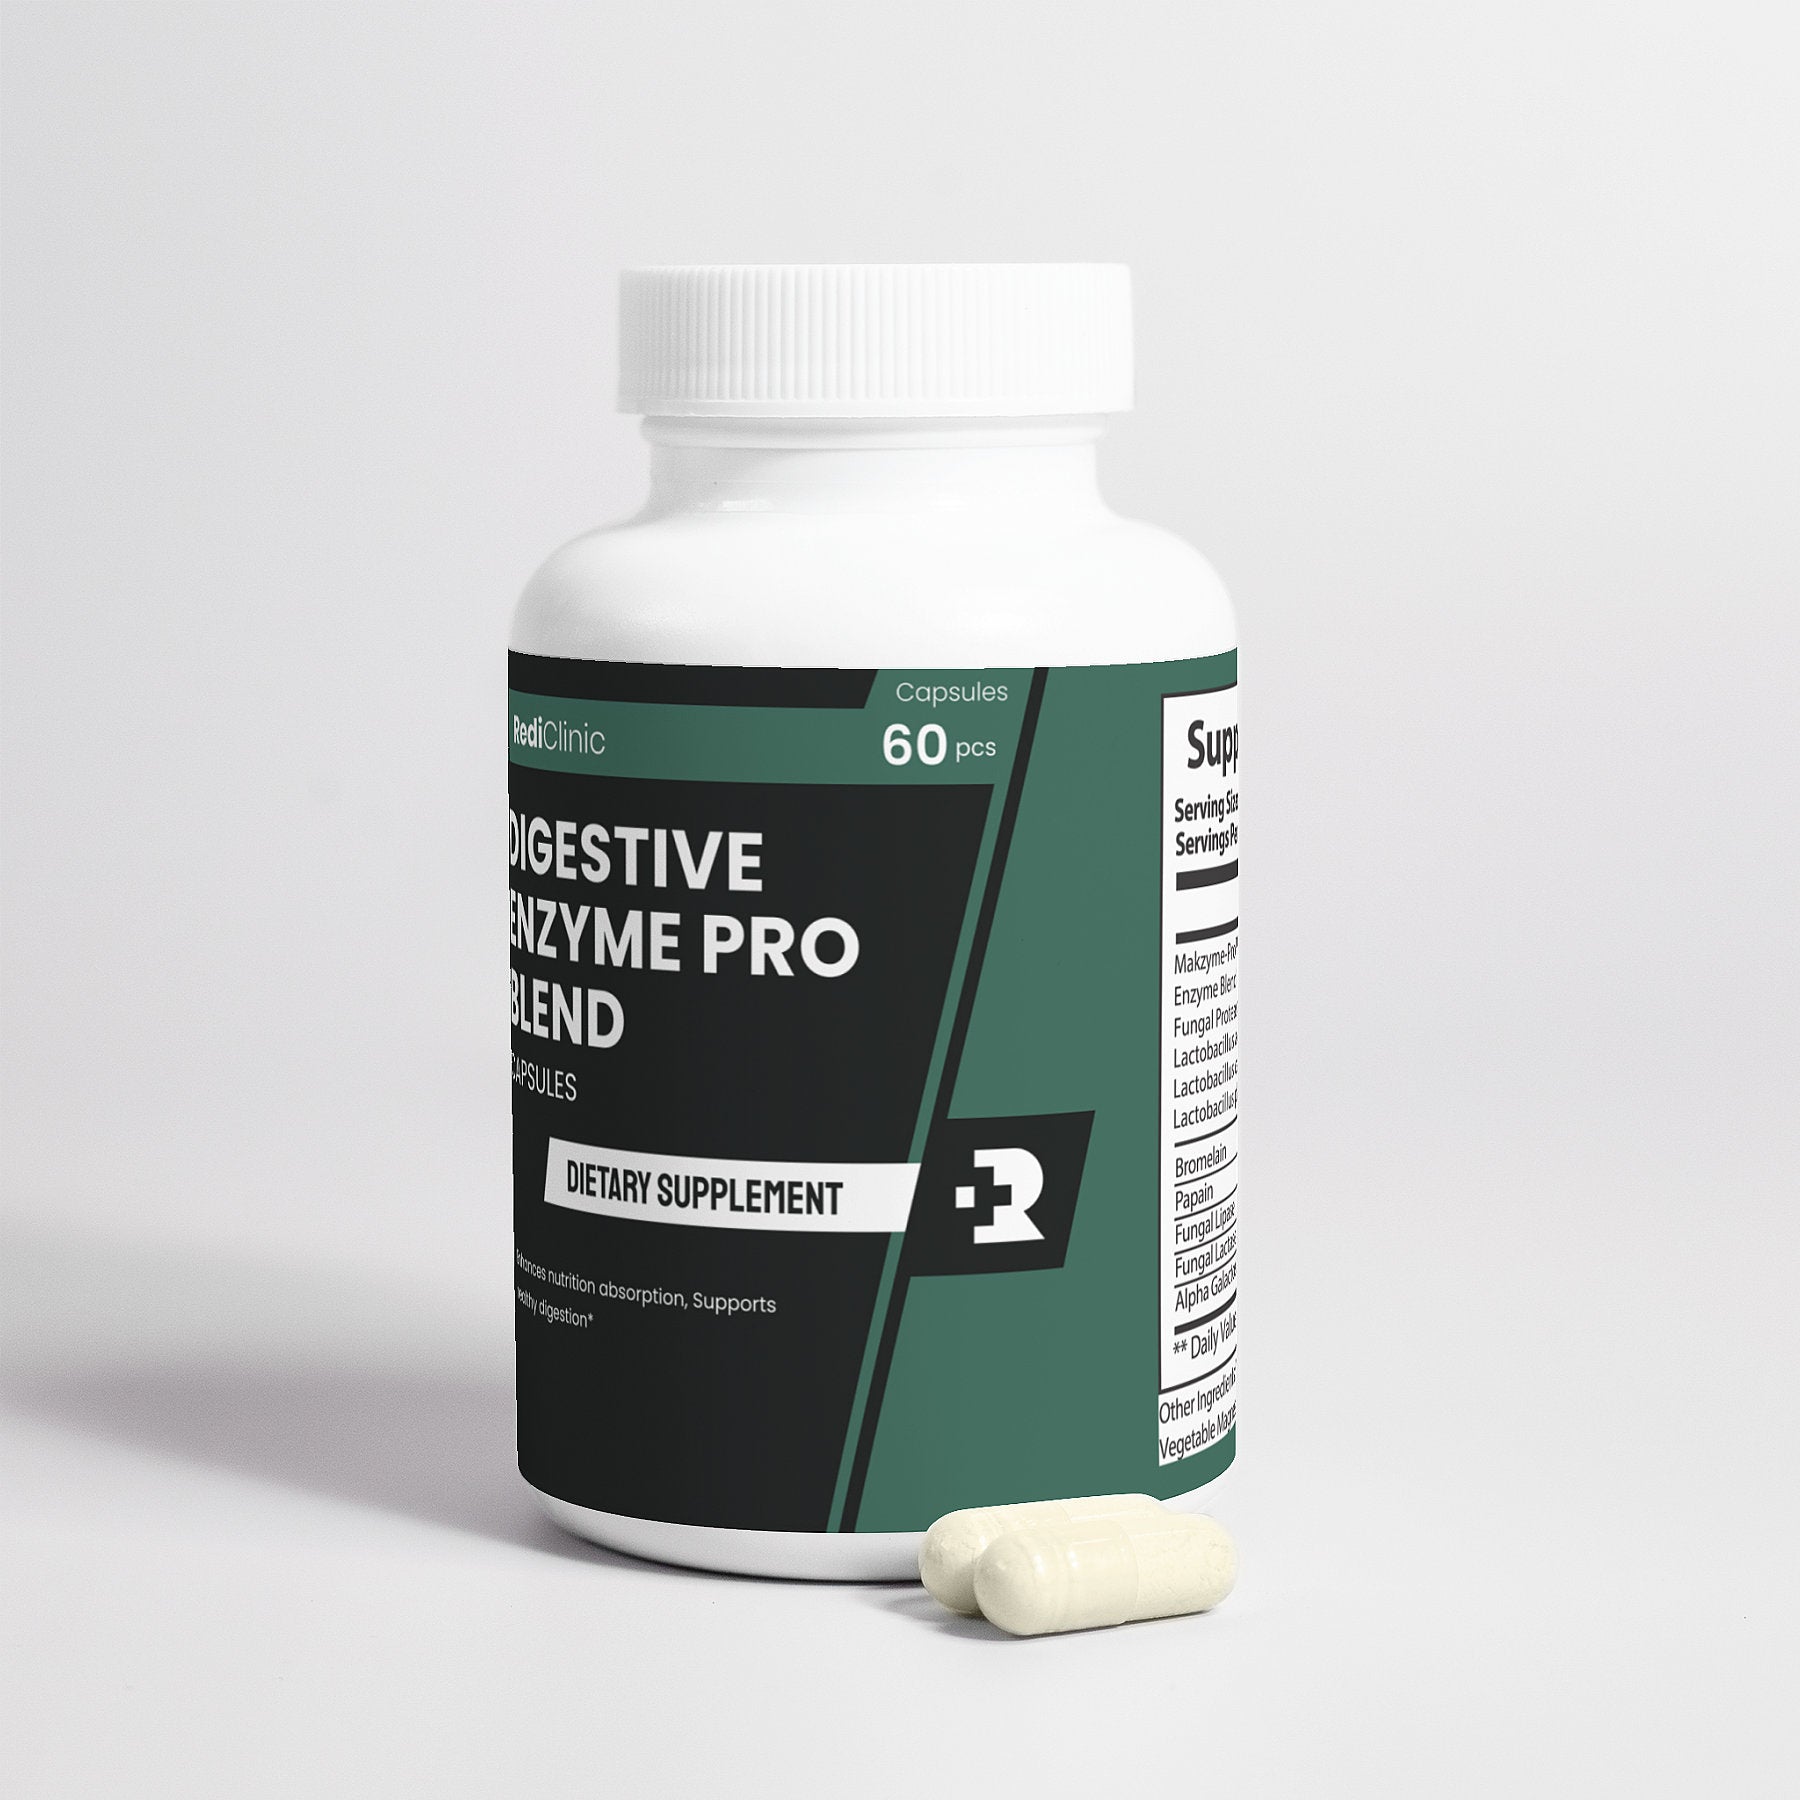 RediClinic Digestive Enzyme Pro Blend